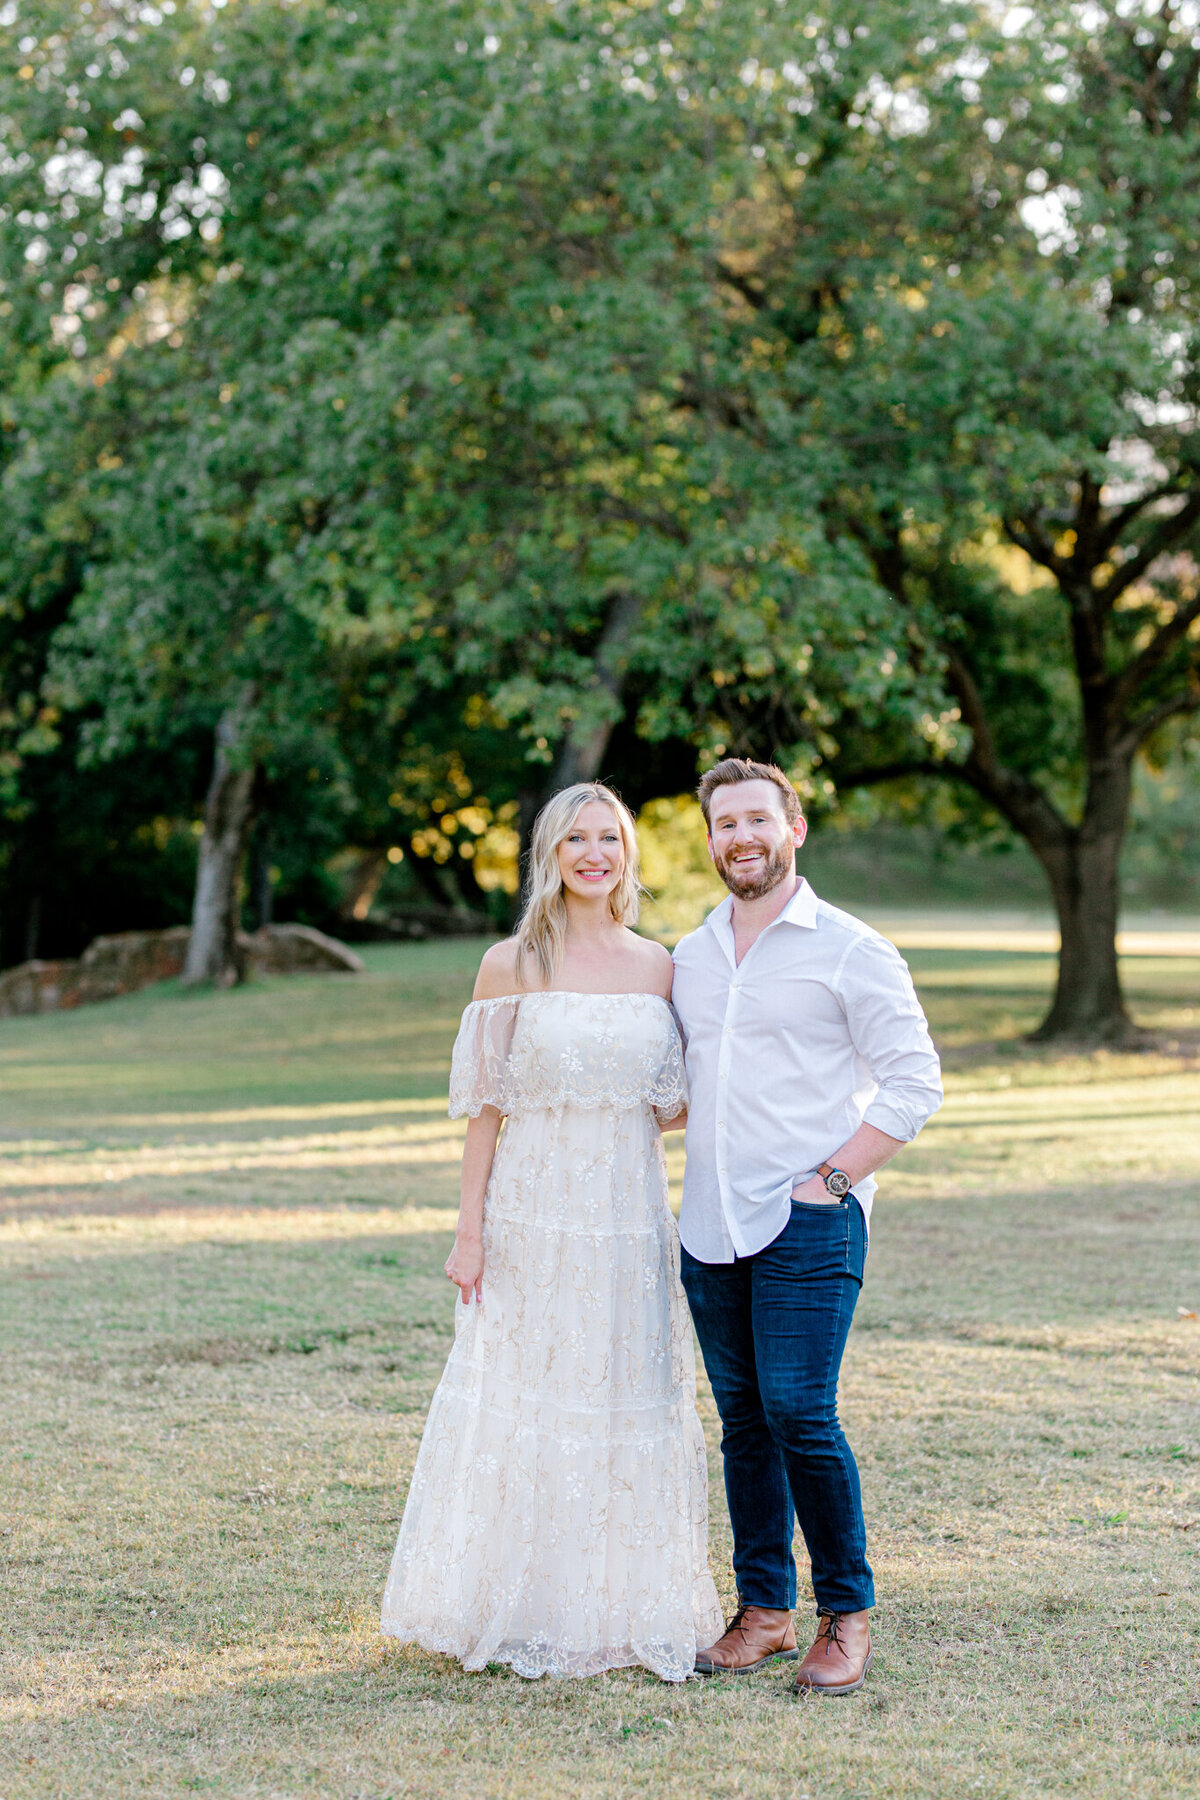 Jessica & Blake Engagement Session at Reverchon Park | Dallas Wedding Photographer-6